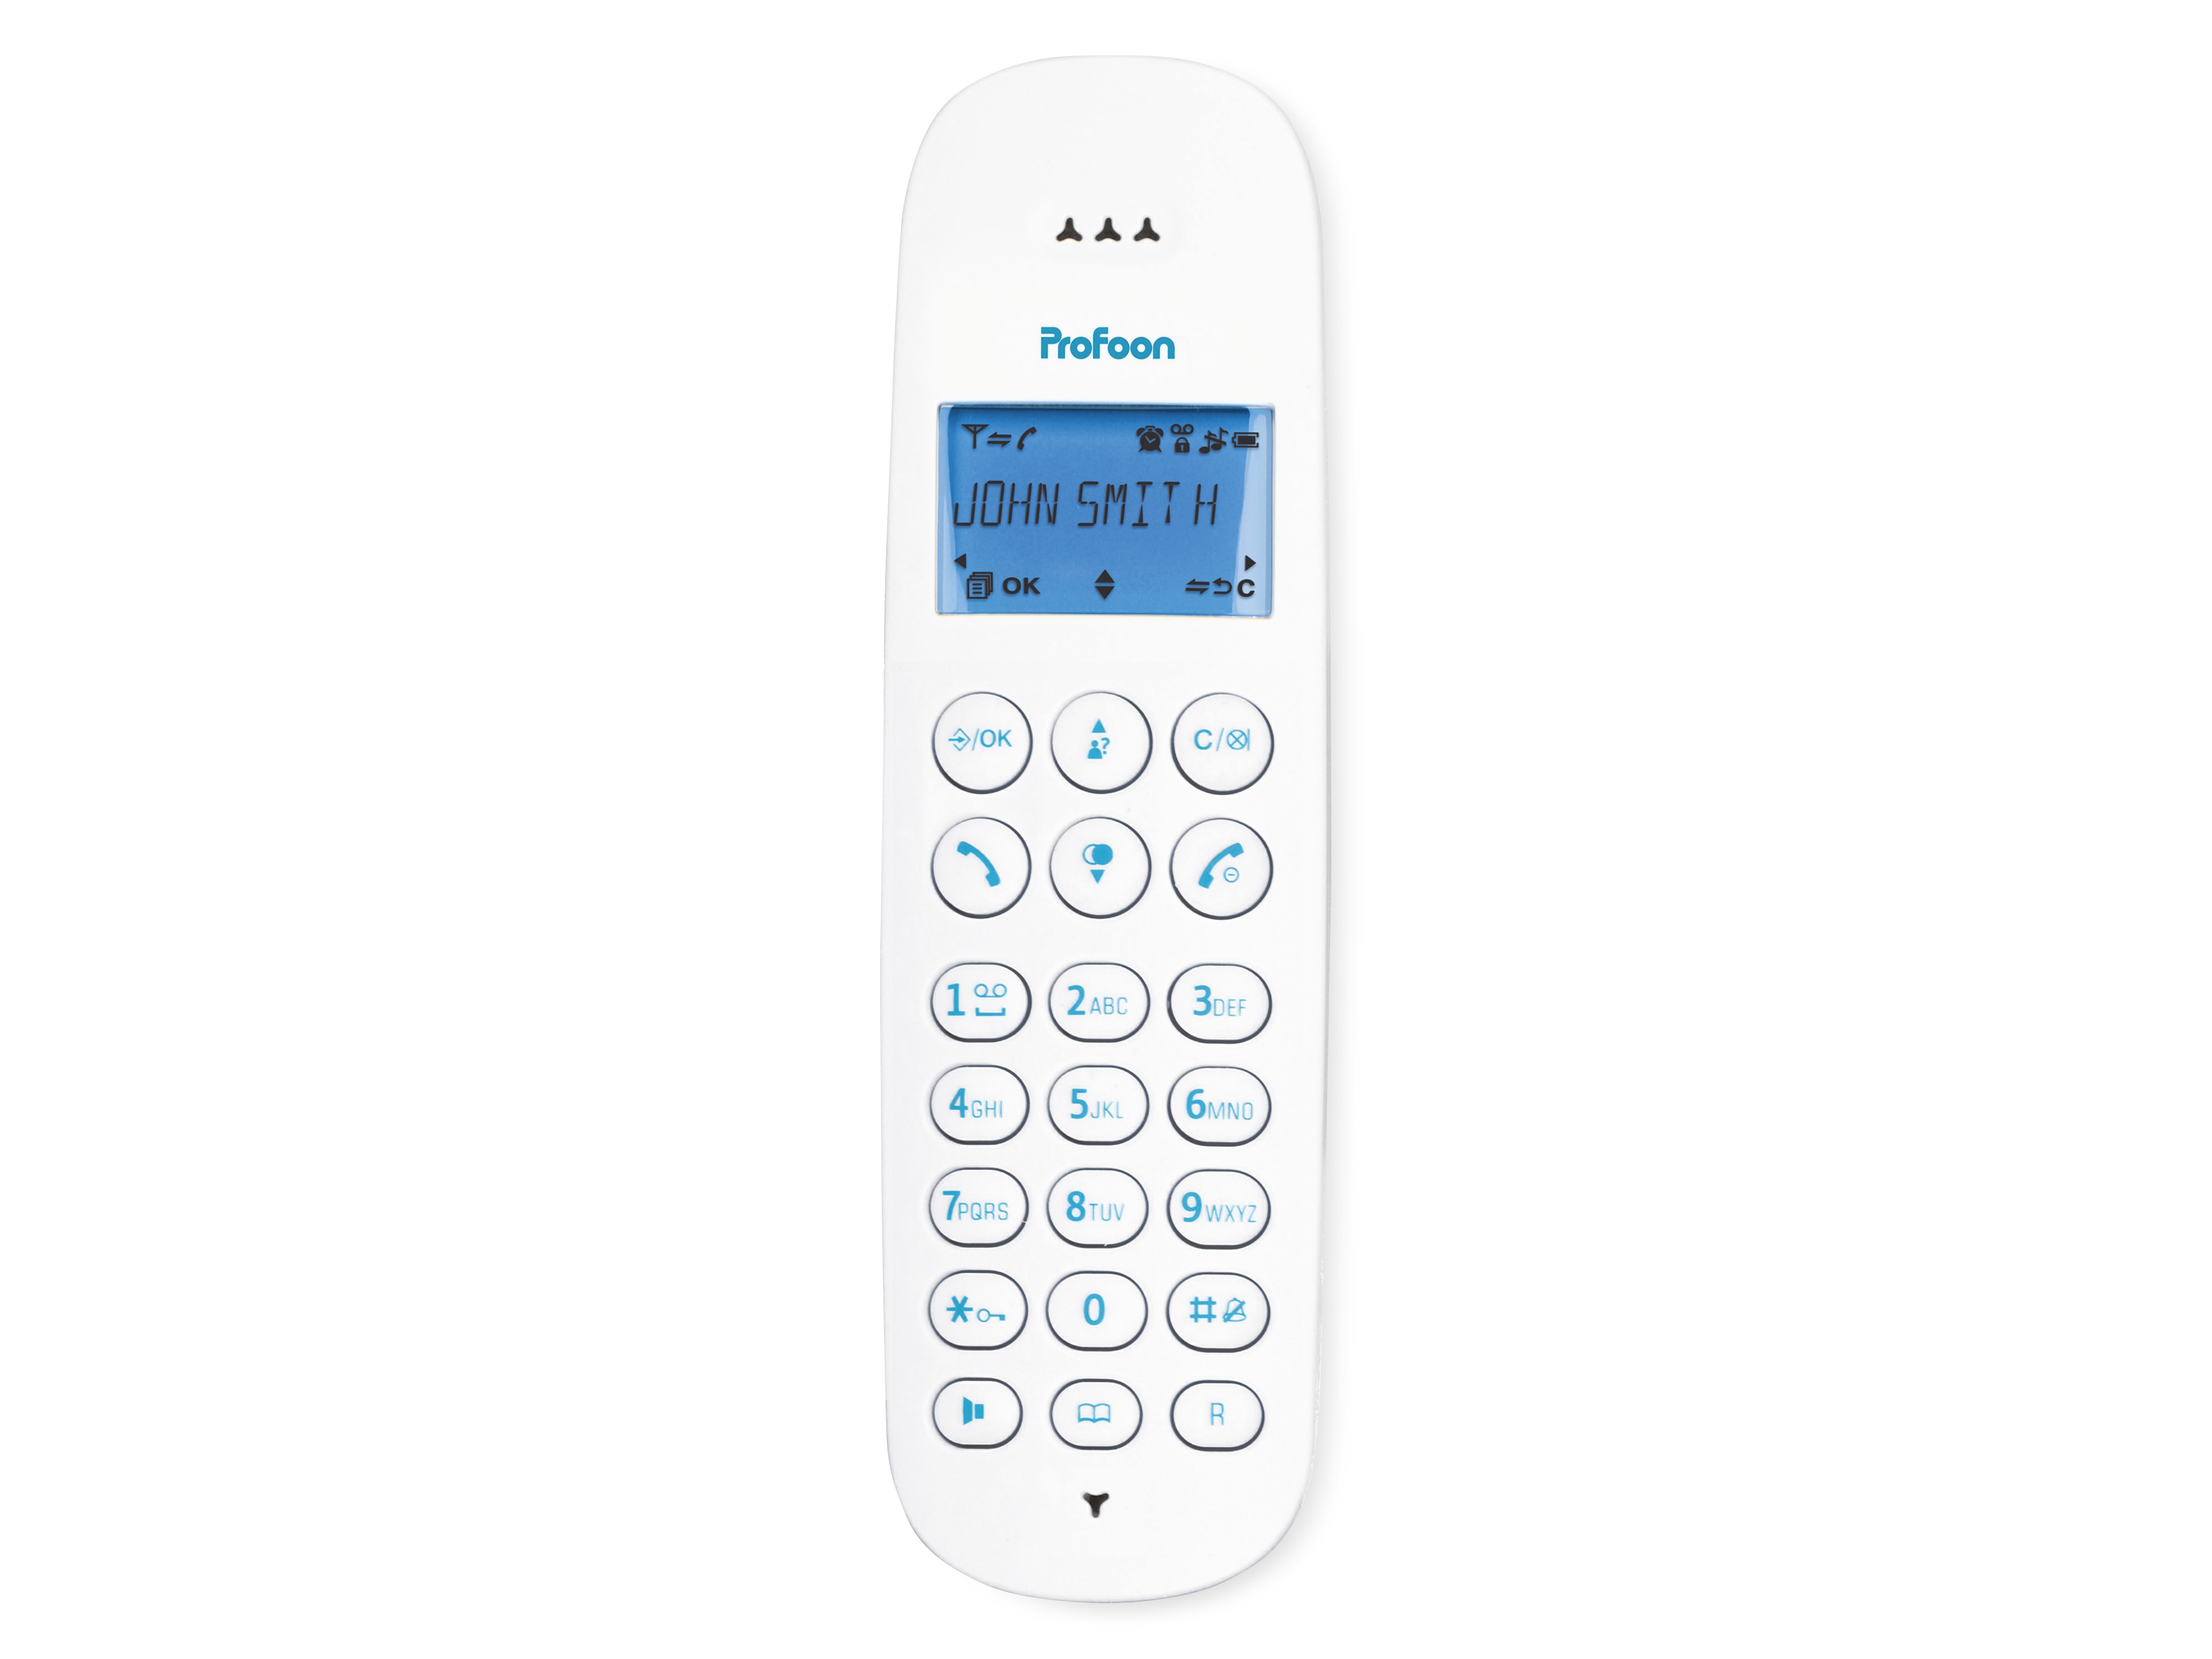 PROFOON DECT-Telefon PDX300BW, weiß/blau